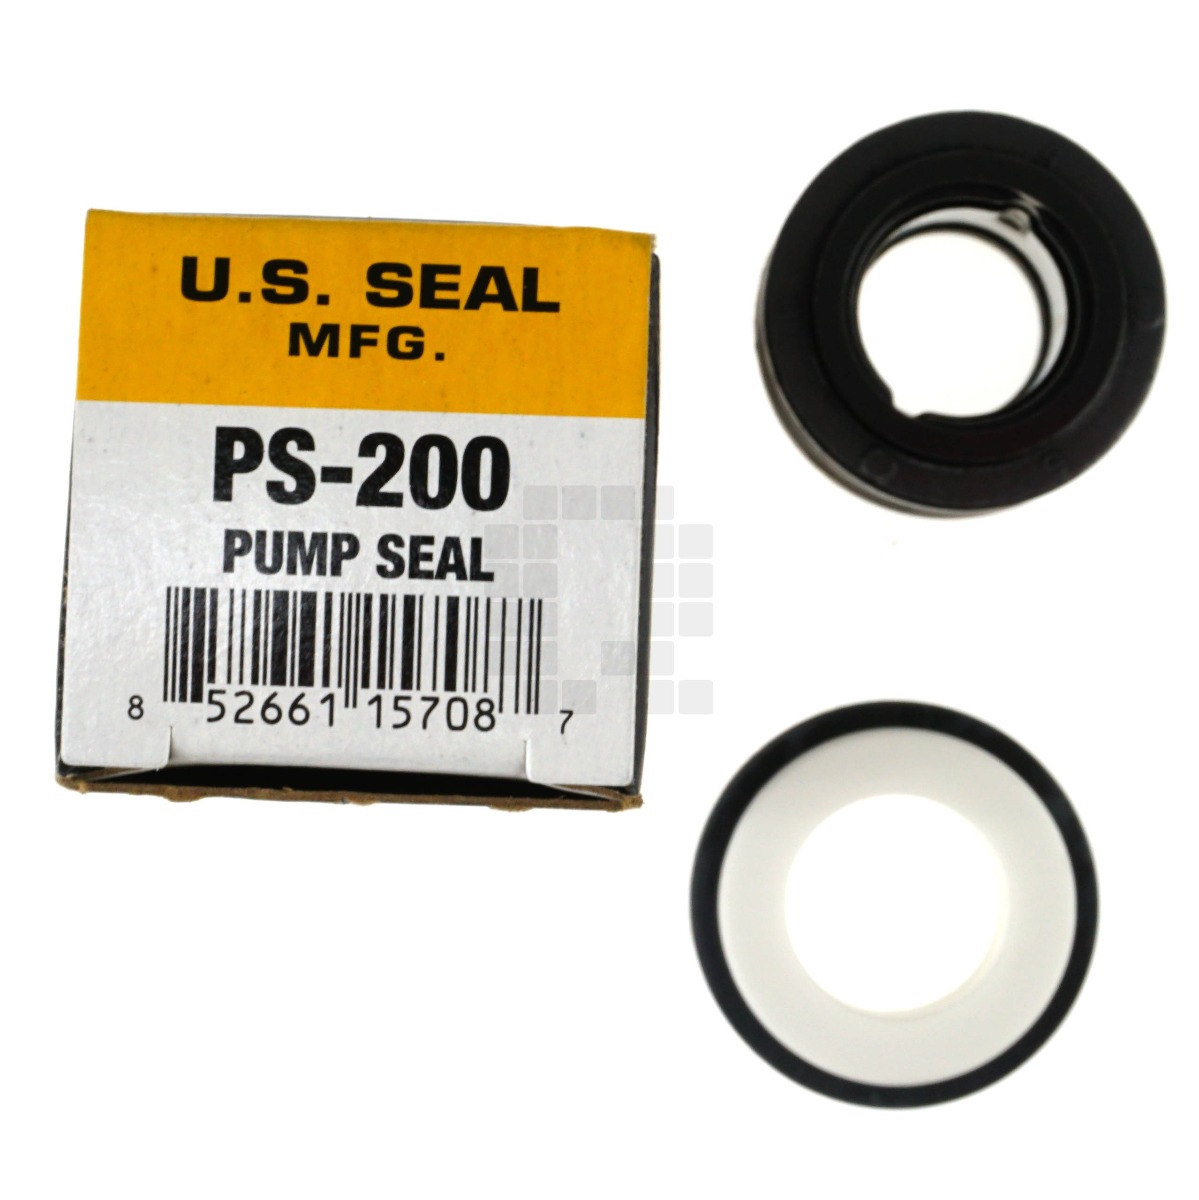 U.S. Seal Manufacturing PS-200 5/8" Pump Seal